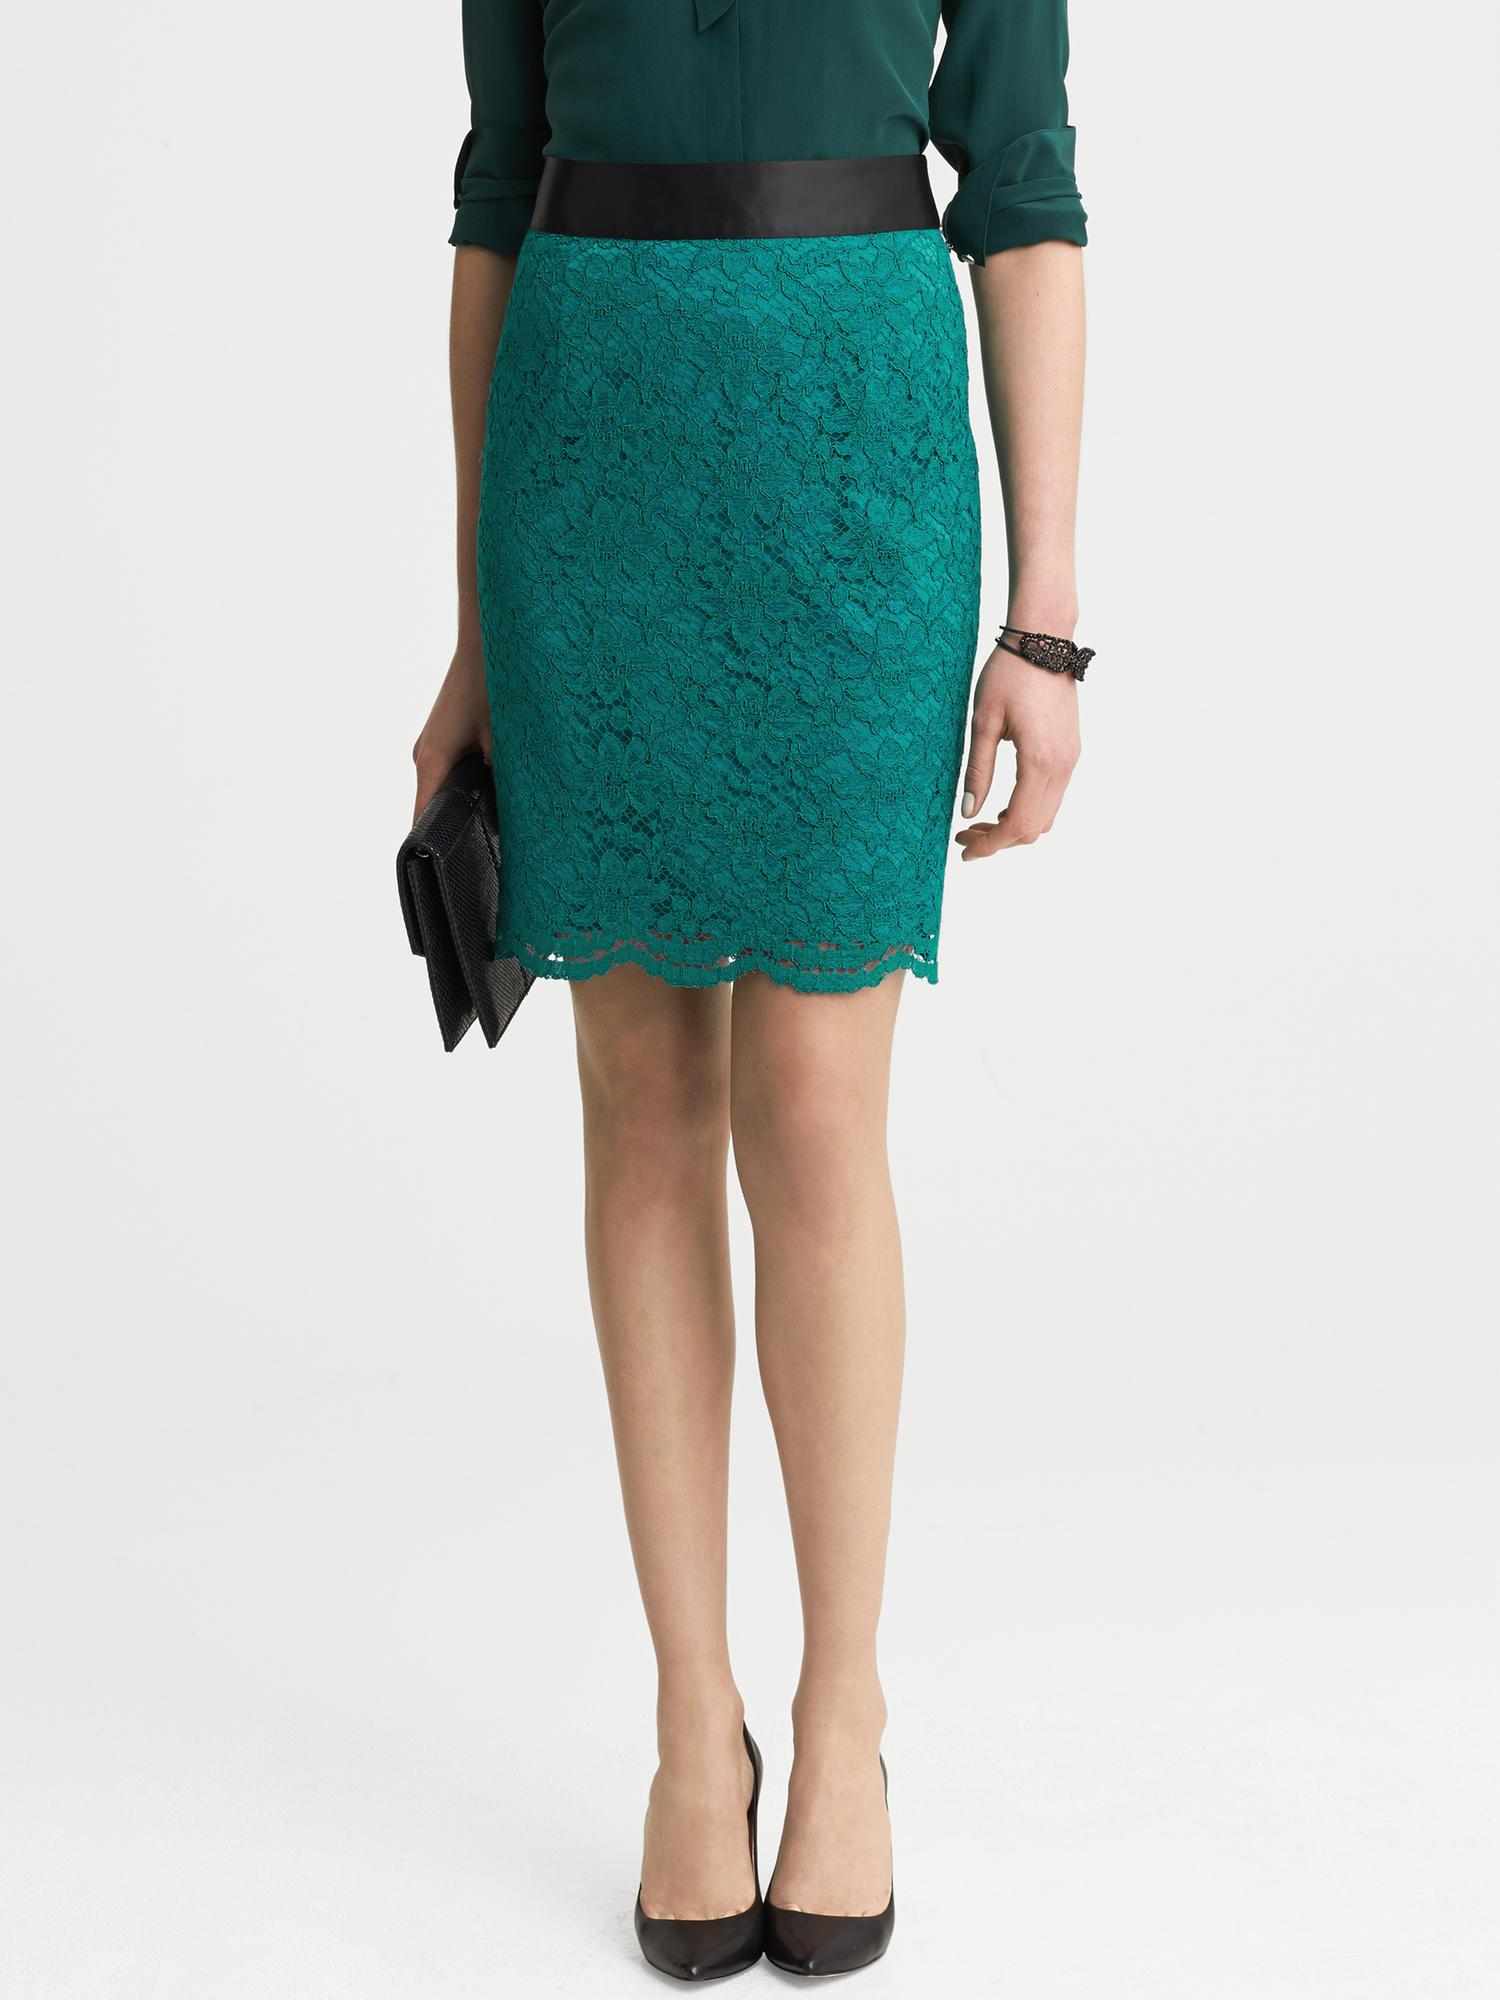 L'Wren Scott Collection Teal Lace Skirt